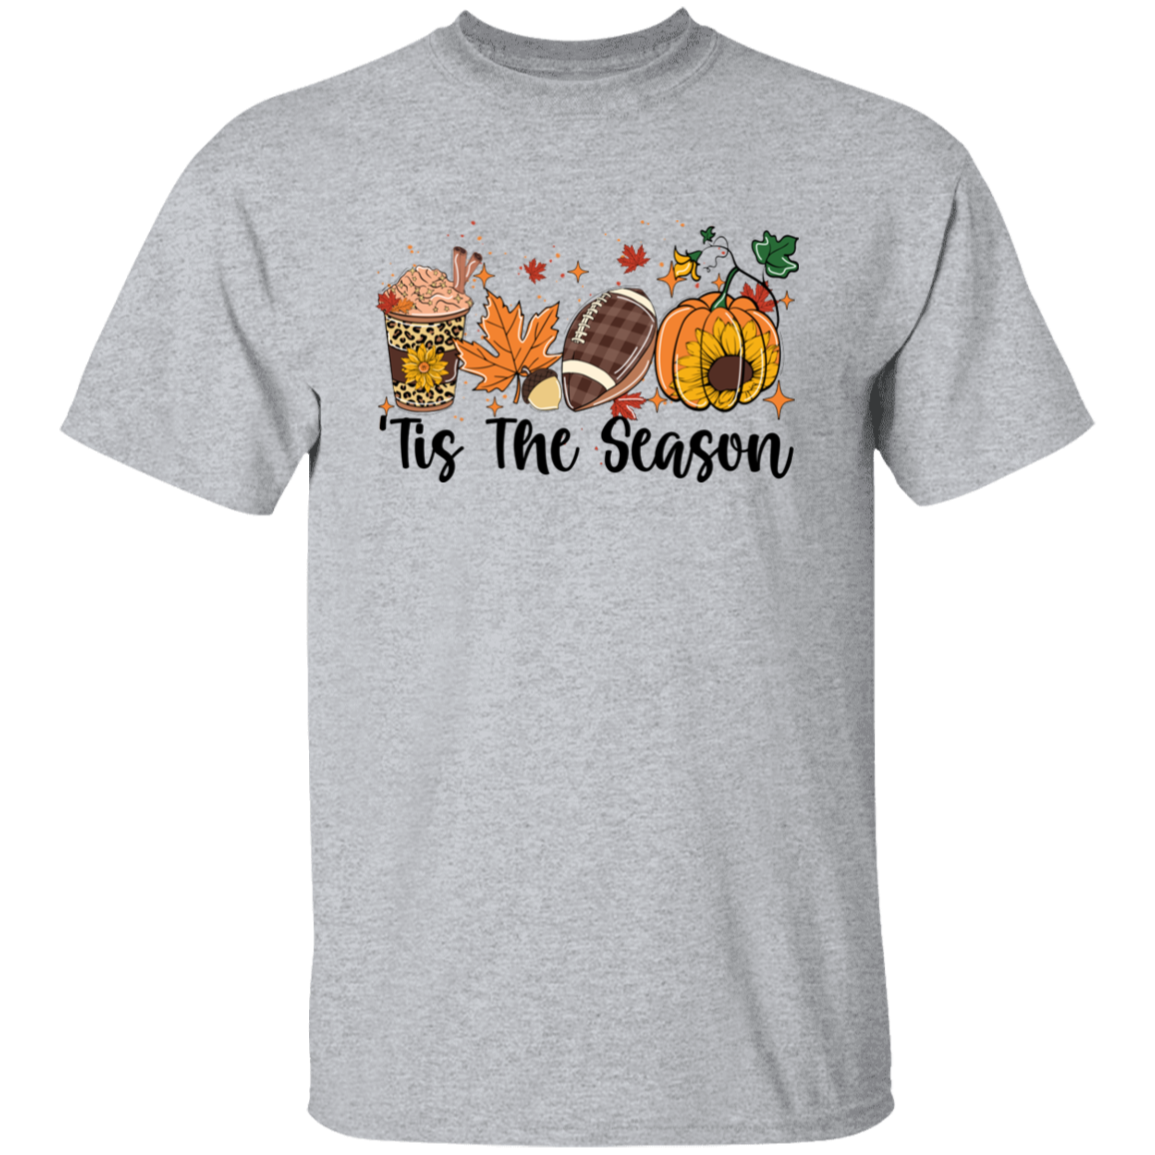 Tis the Season Football and Fall T-Shirt